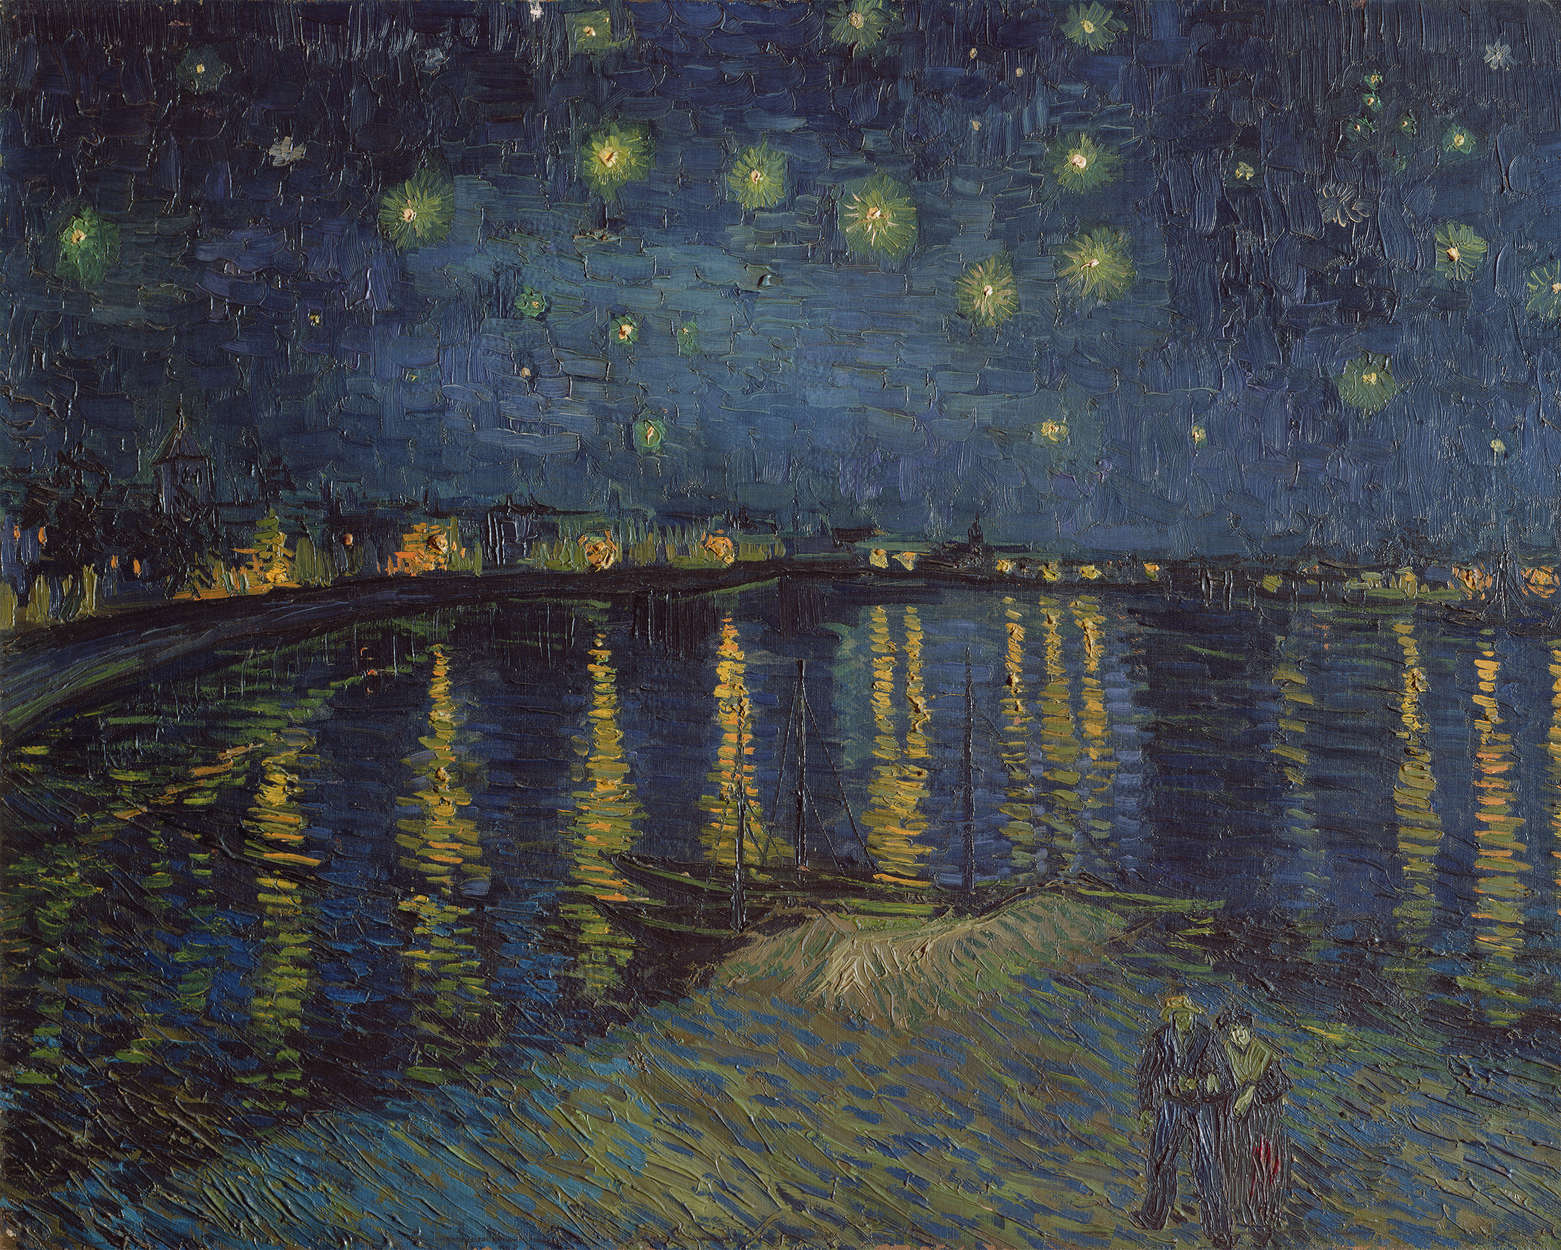             Sterrennacht boven de Rhône" muurschildering van Vincent van Gogh
        